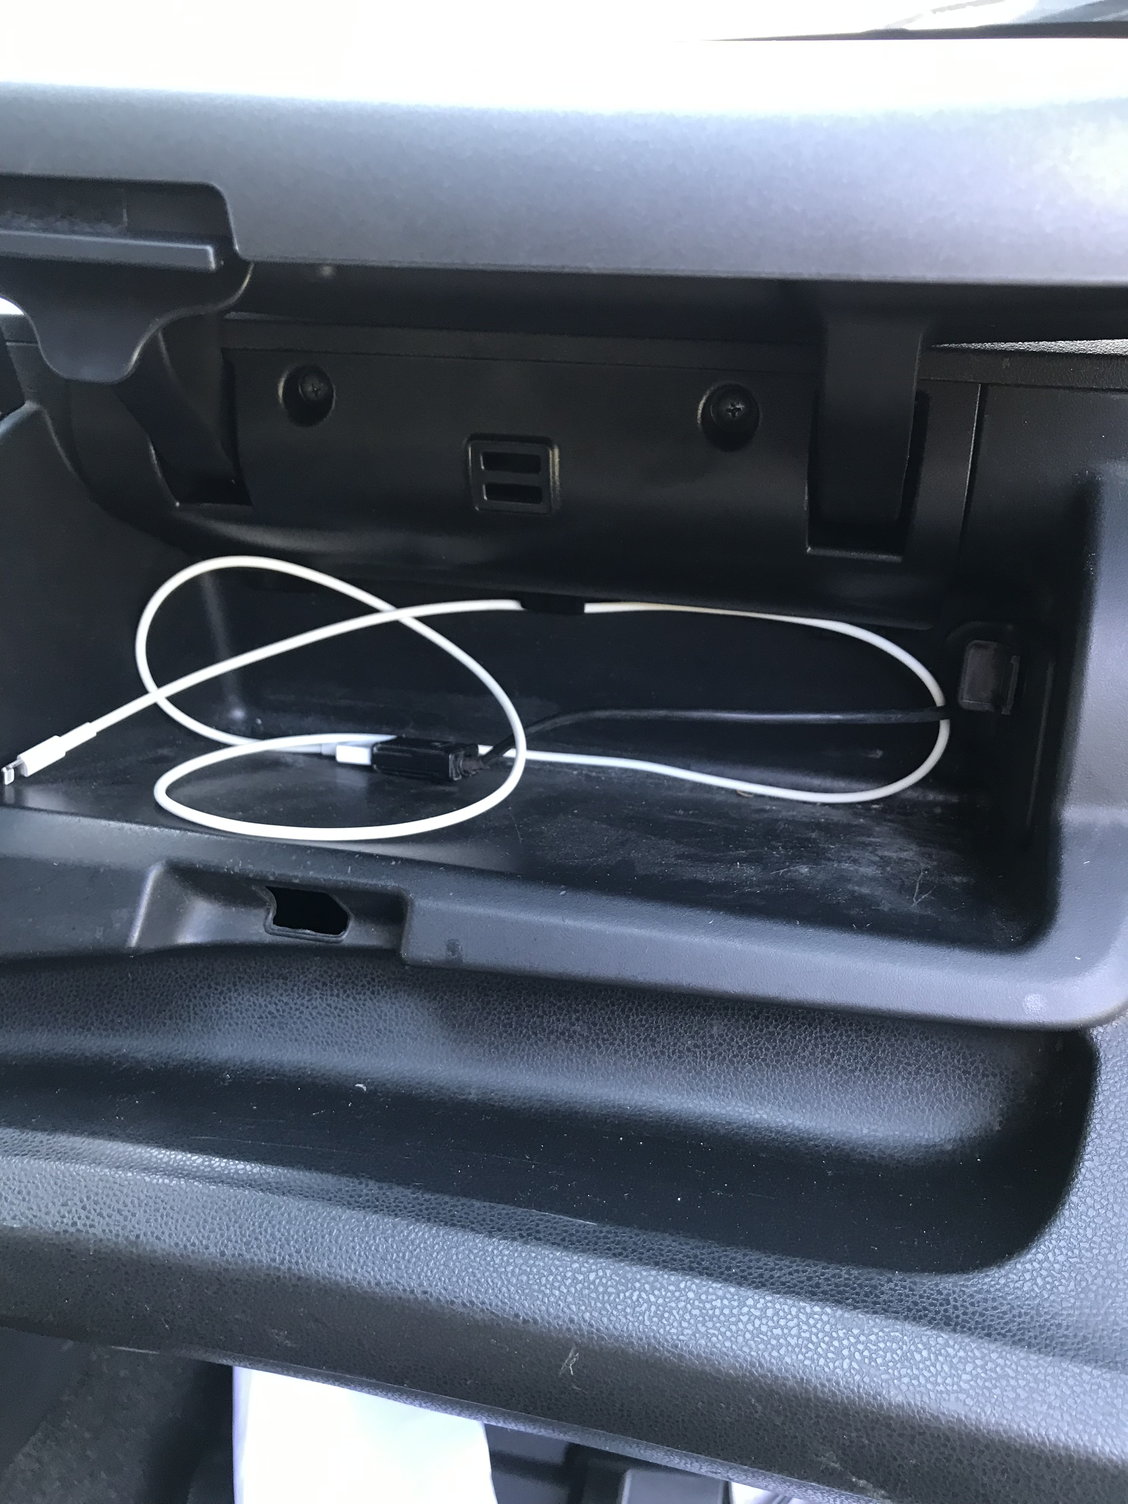 2019 Silverado Usb Port Not Working Hardwired 5V USB port? Jeep